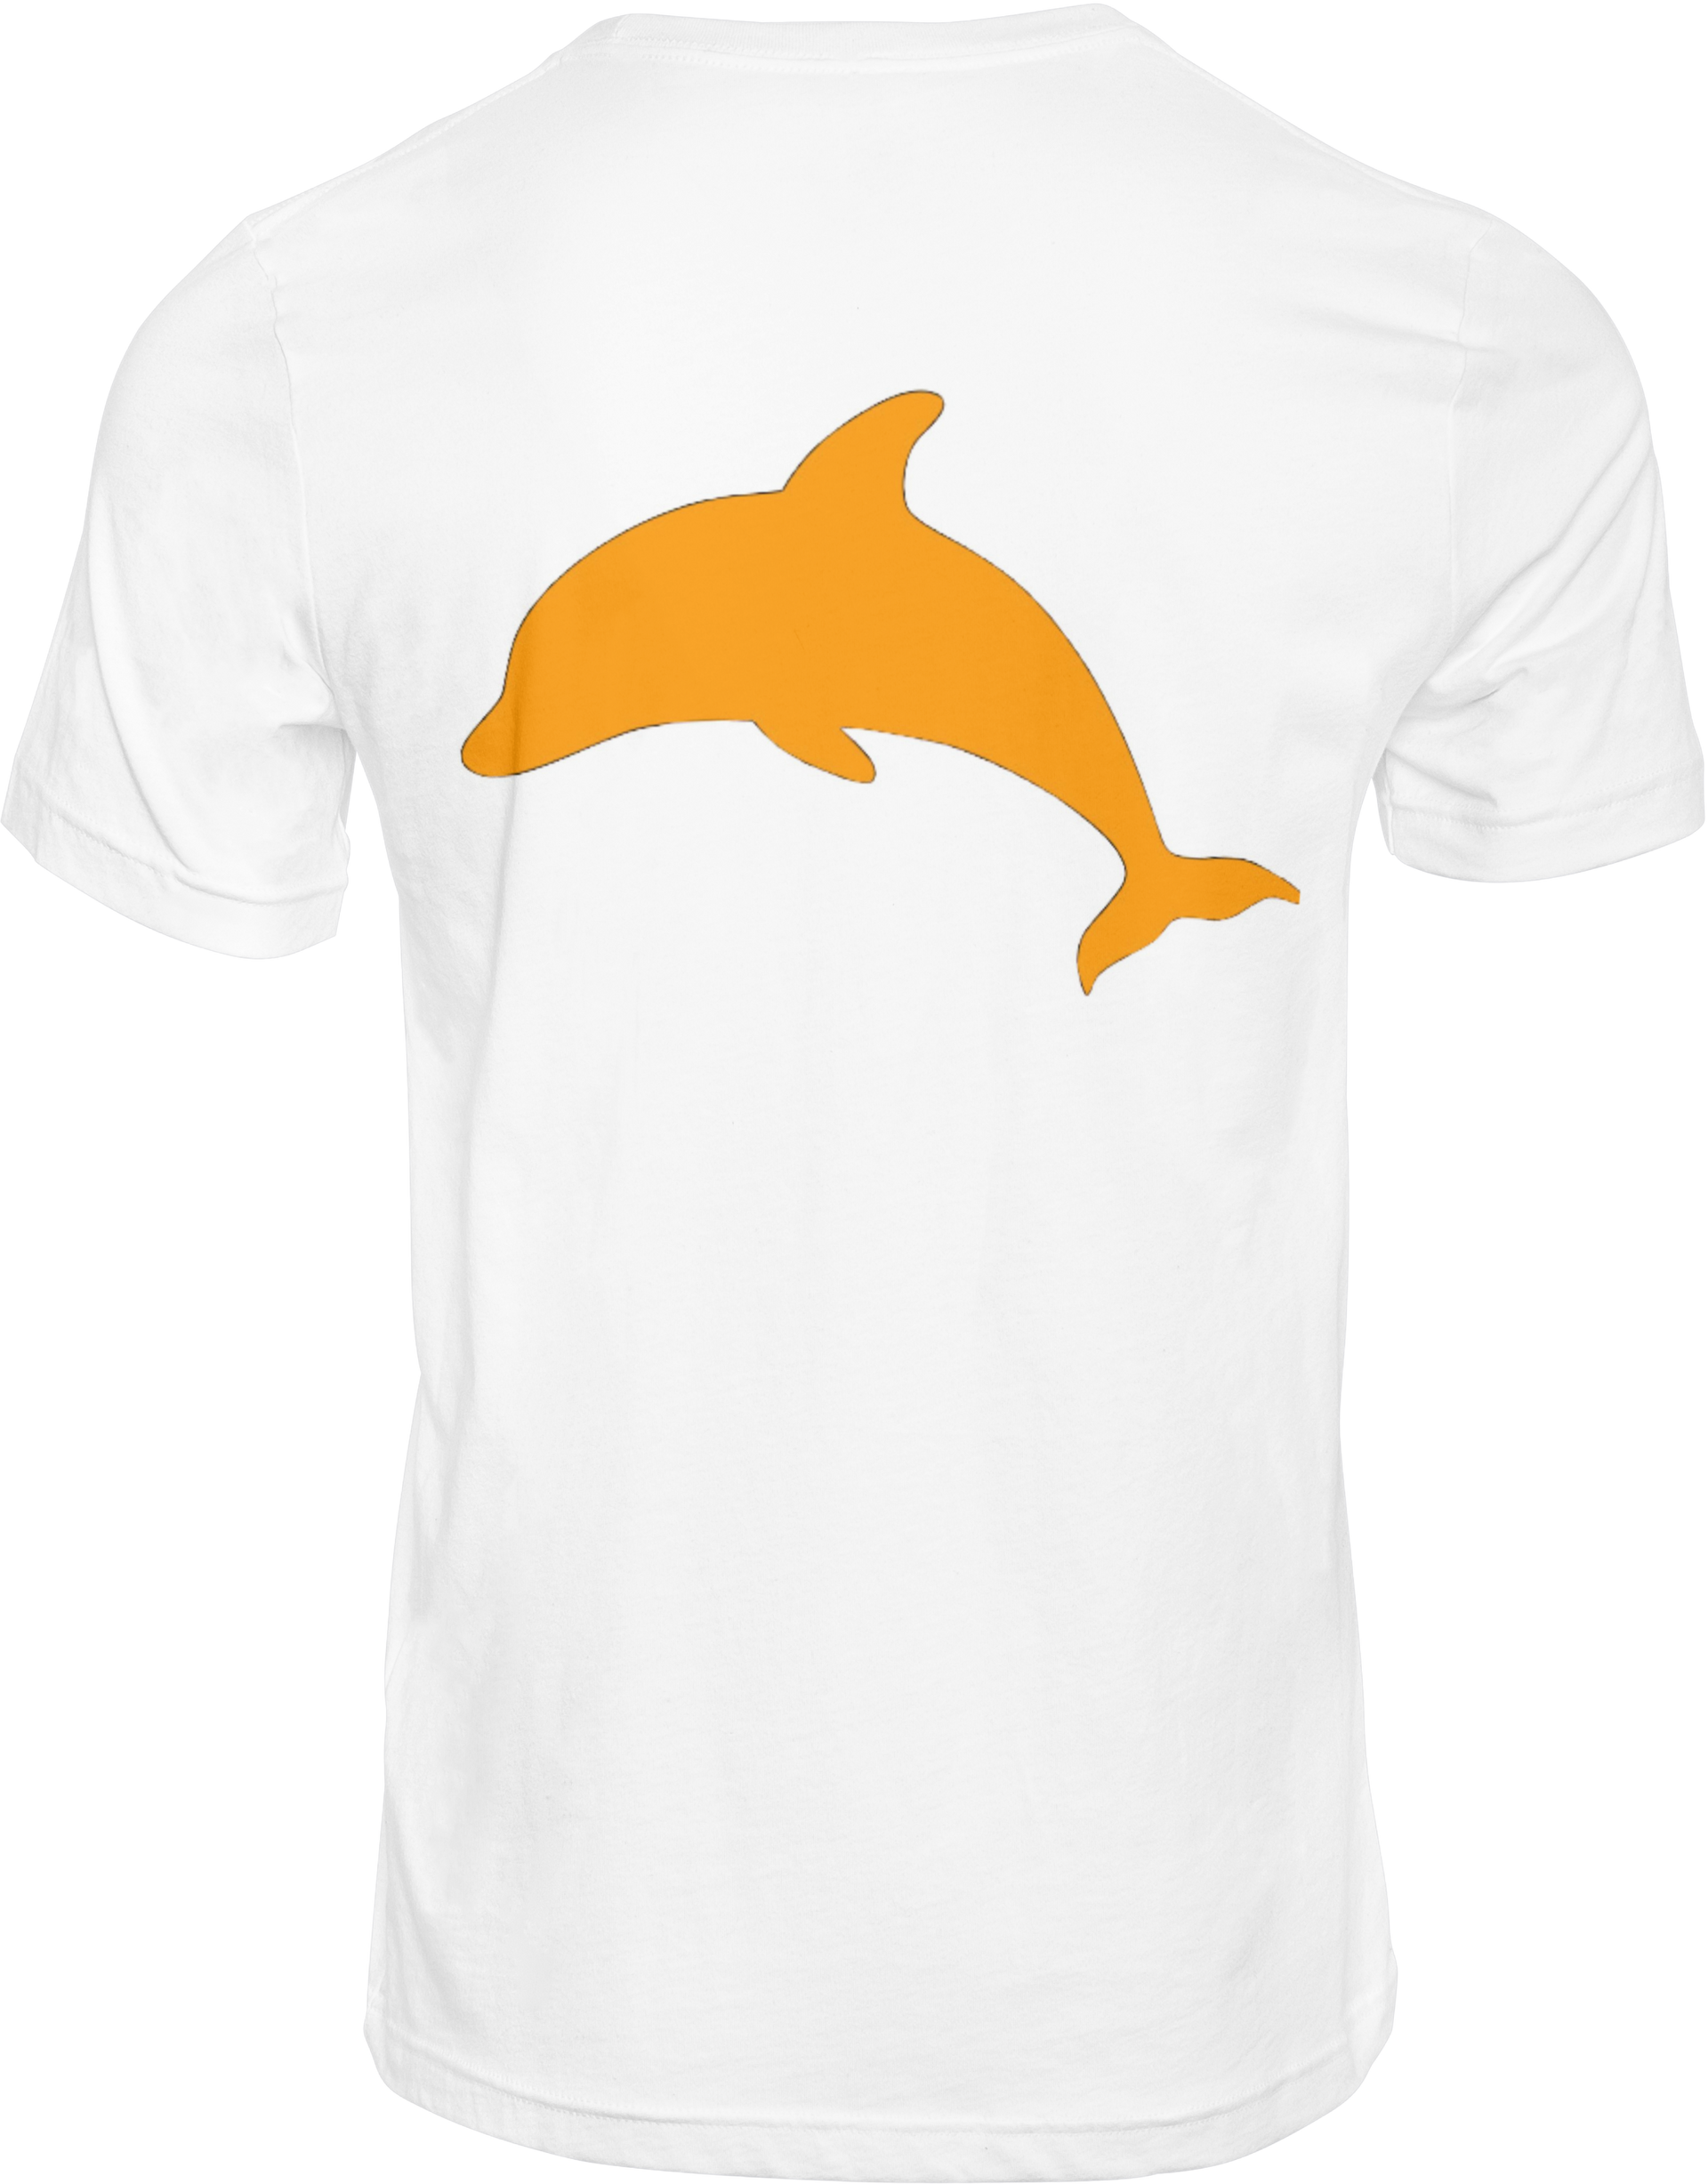 Ivy League Dolphin Short - Candy Orange